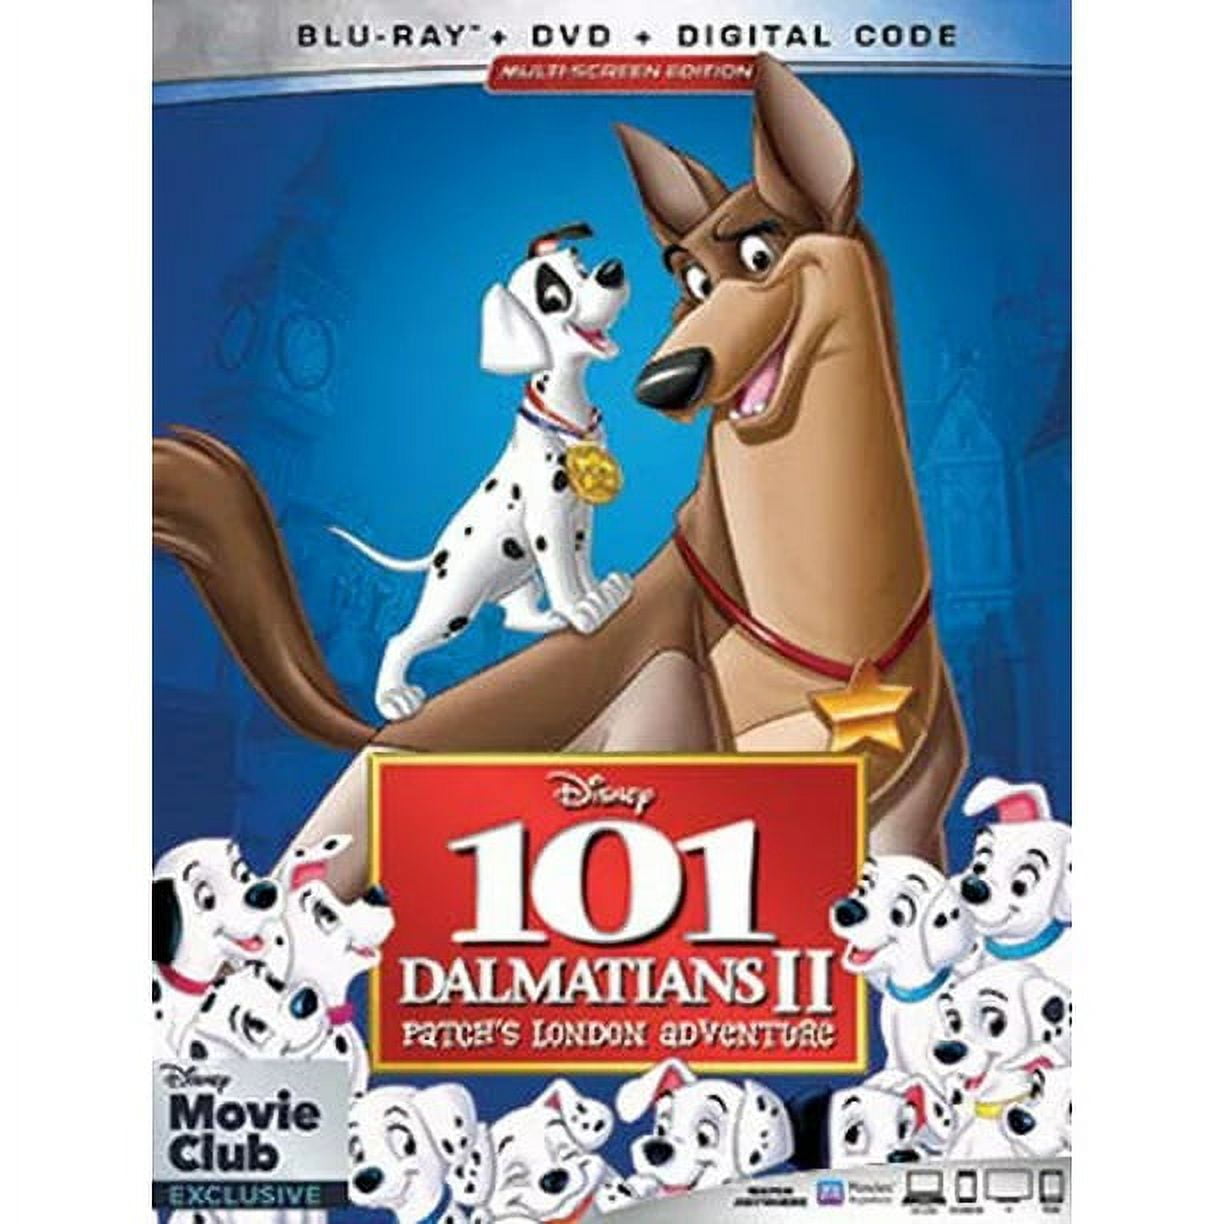 101 Dalmatians 2: Patch's London Adventure Blu-ray + DVD + Digital